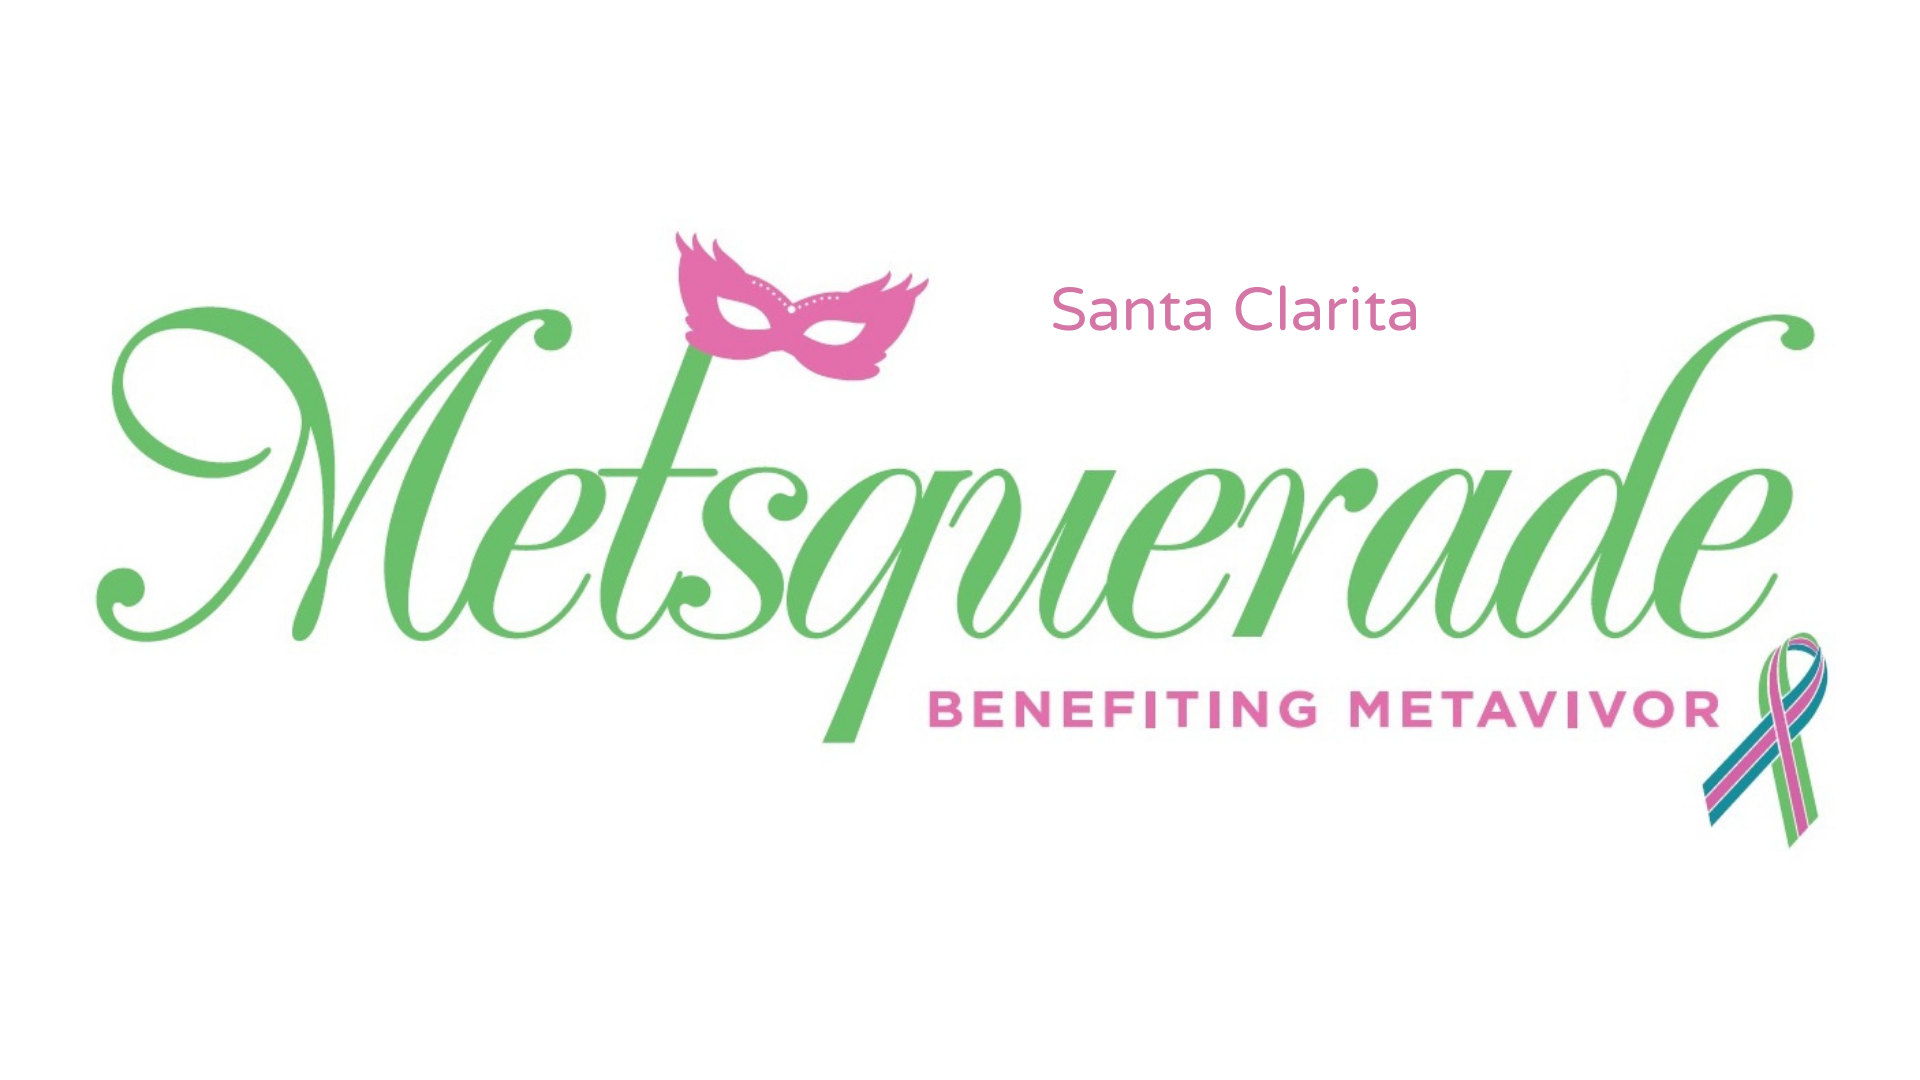 October 8, 2022 Santa Clarita Metsquerade (Santa Clarita, CA)